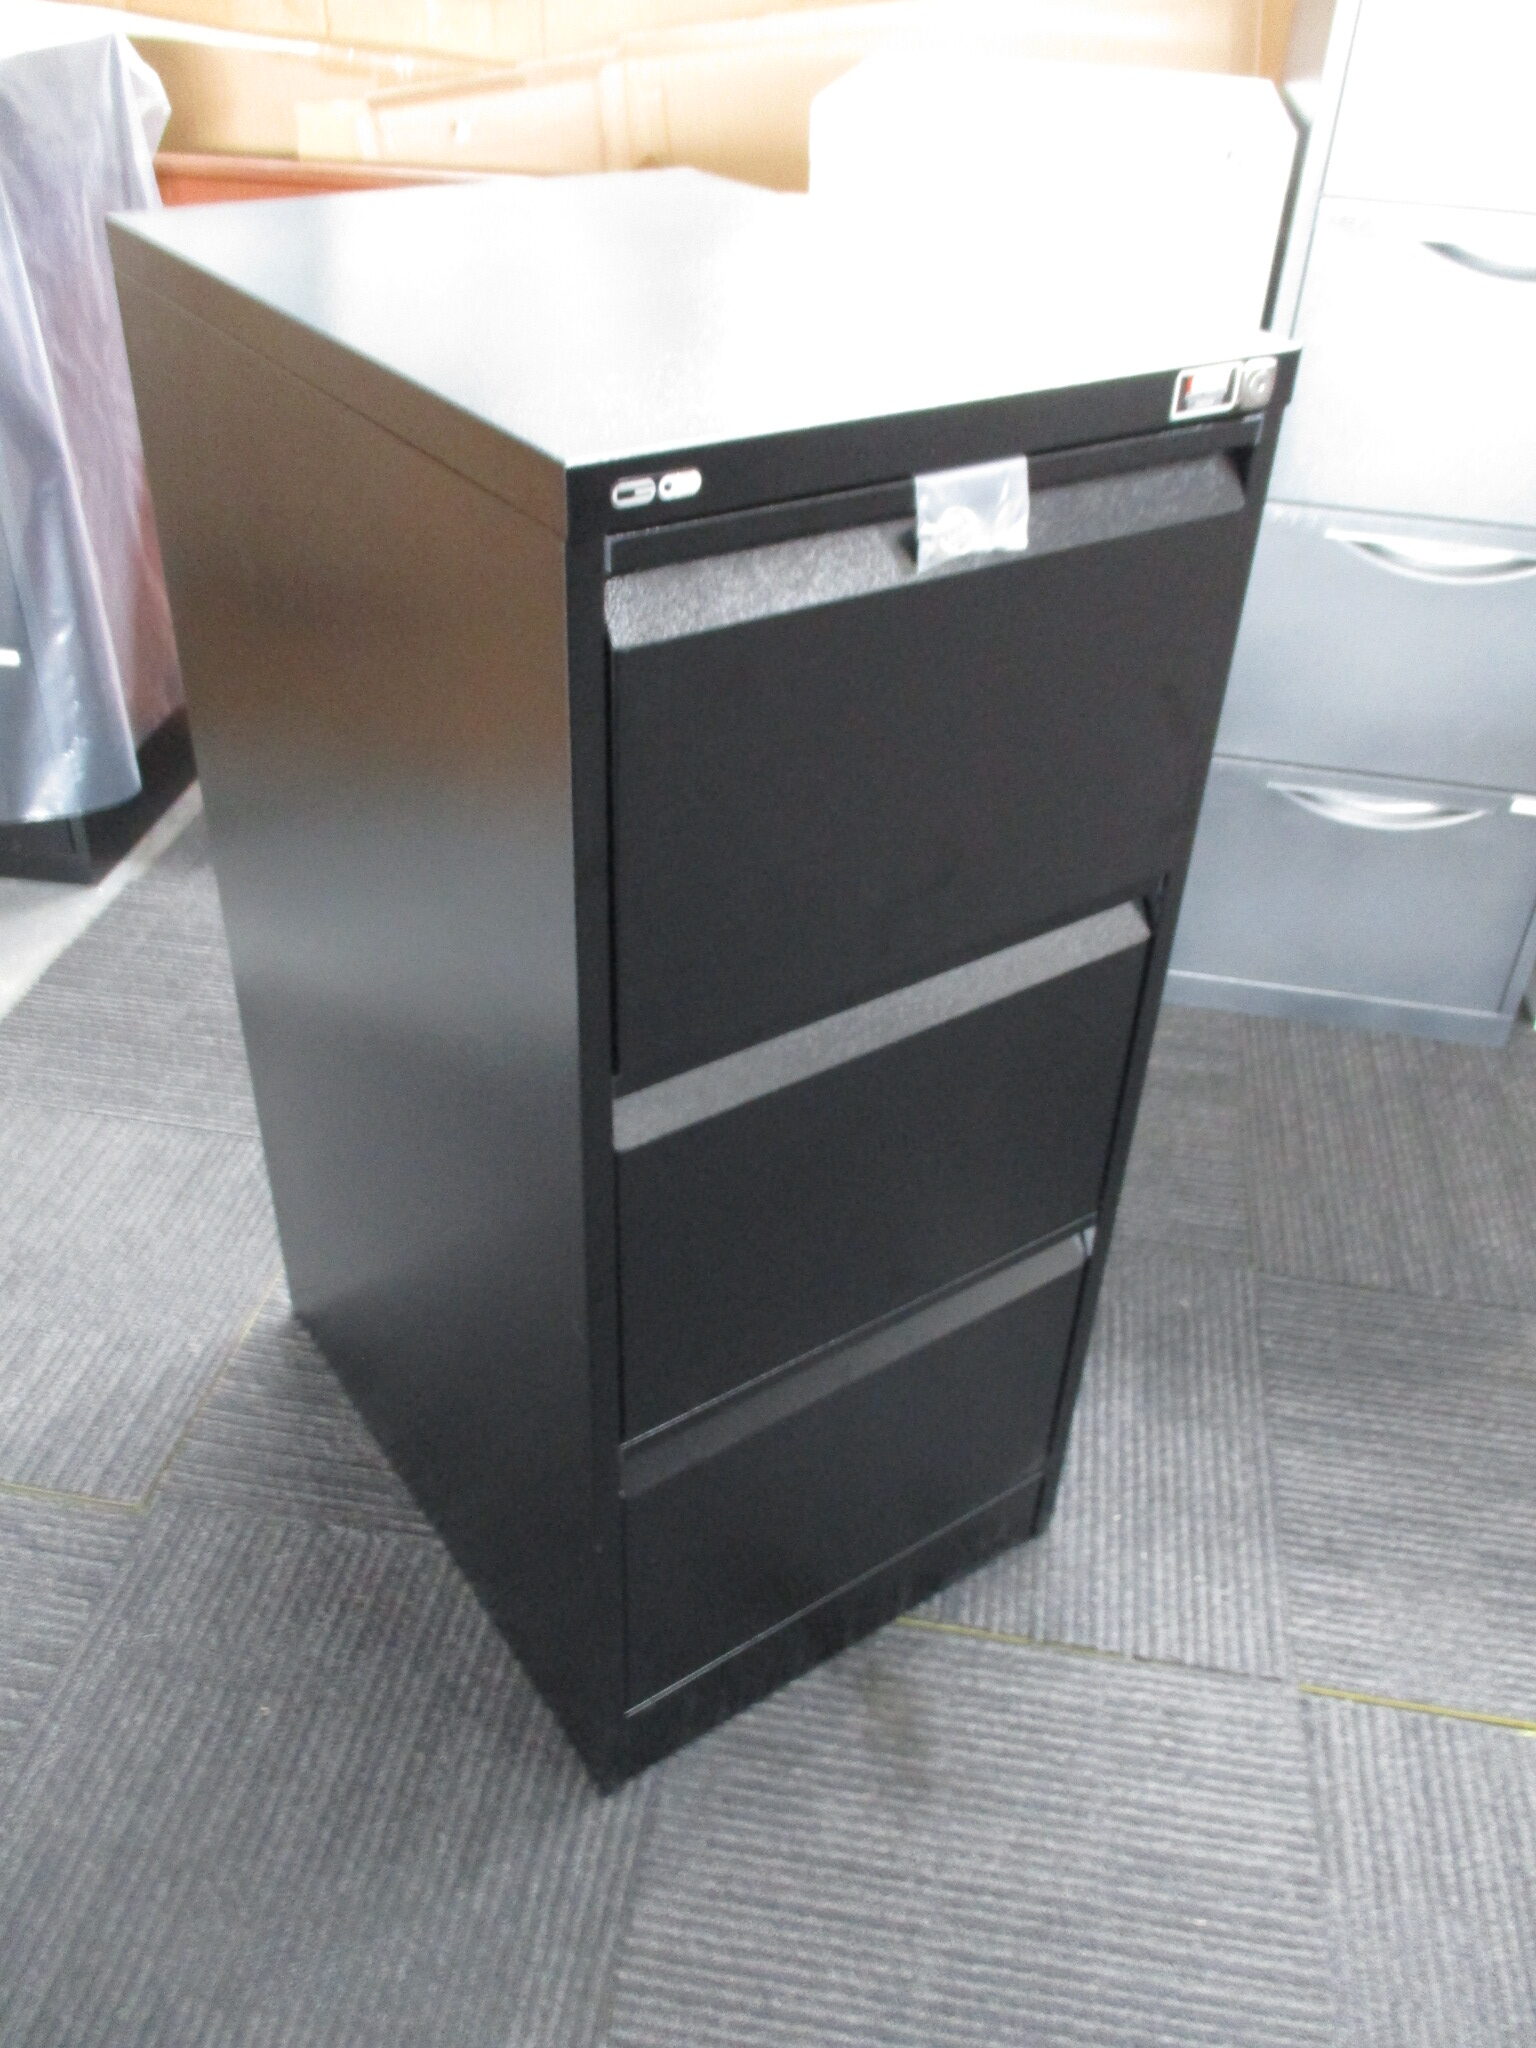 New GO Black 3 Drawer Filing Cabinet $340